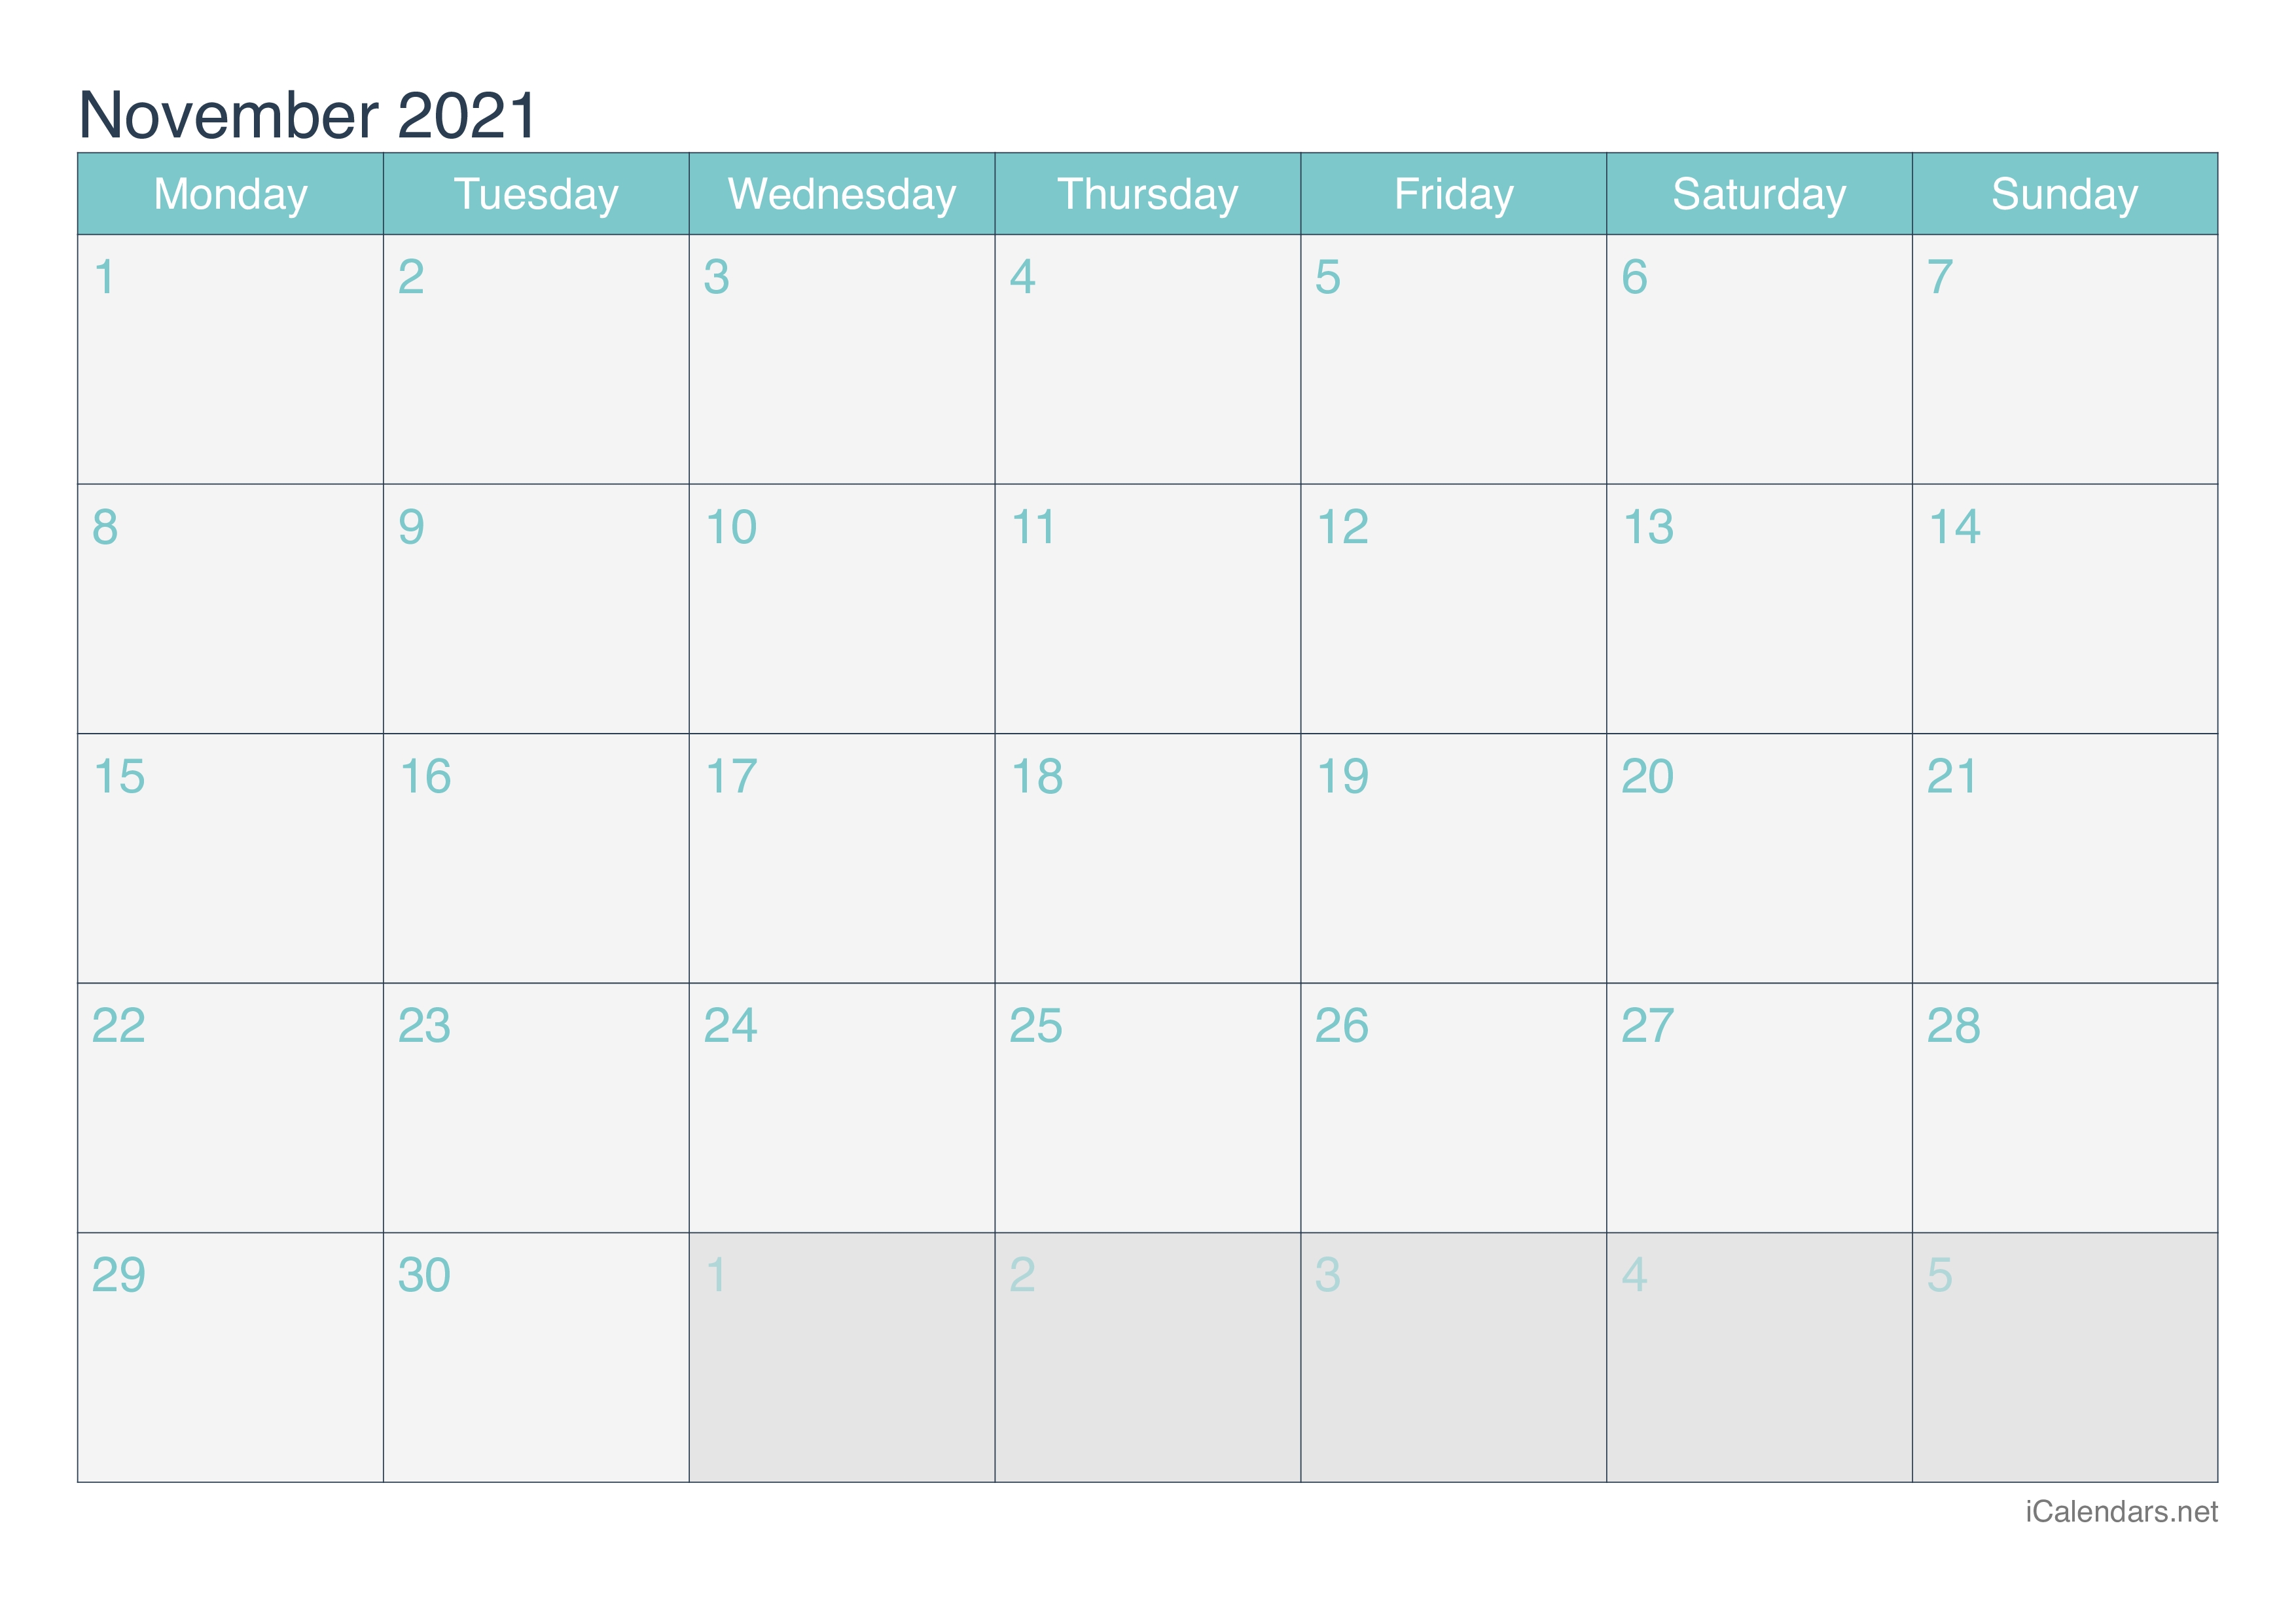 November 2021 Printable Calendar - Icalendars November 2021 Calendar Free Printable